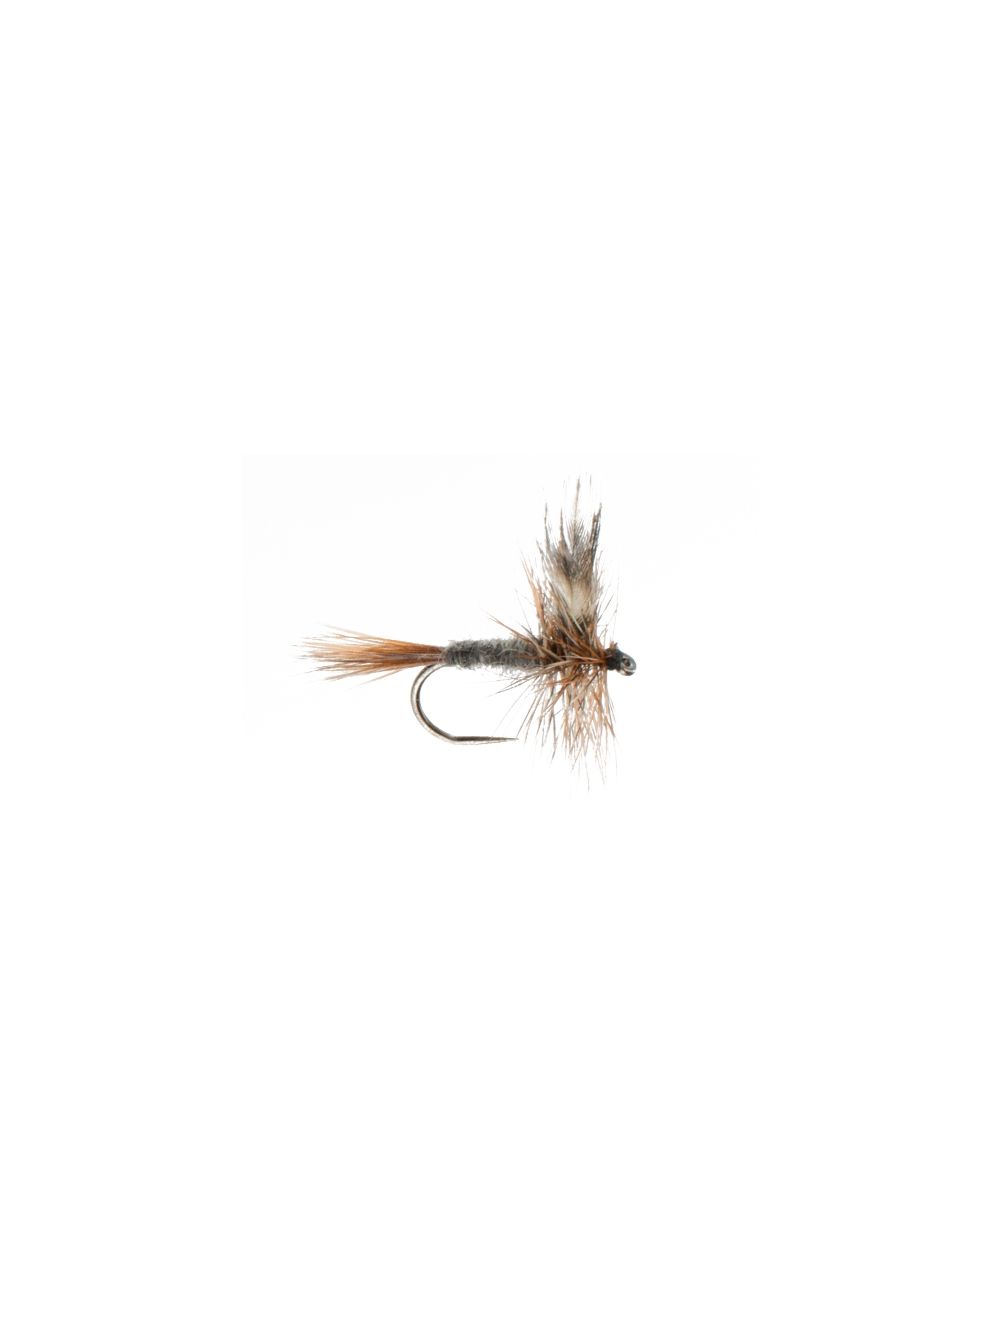 https://eadn-wc02-1020161.nxedge.io/cdn/media/catalog/product/cache/32b930e20bfef0c9badd7ee253a86131/a/d/adams-barbless-fly-fishing-flies-dry-flies_1.jpg